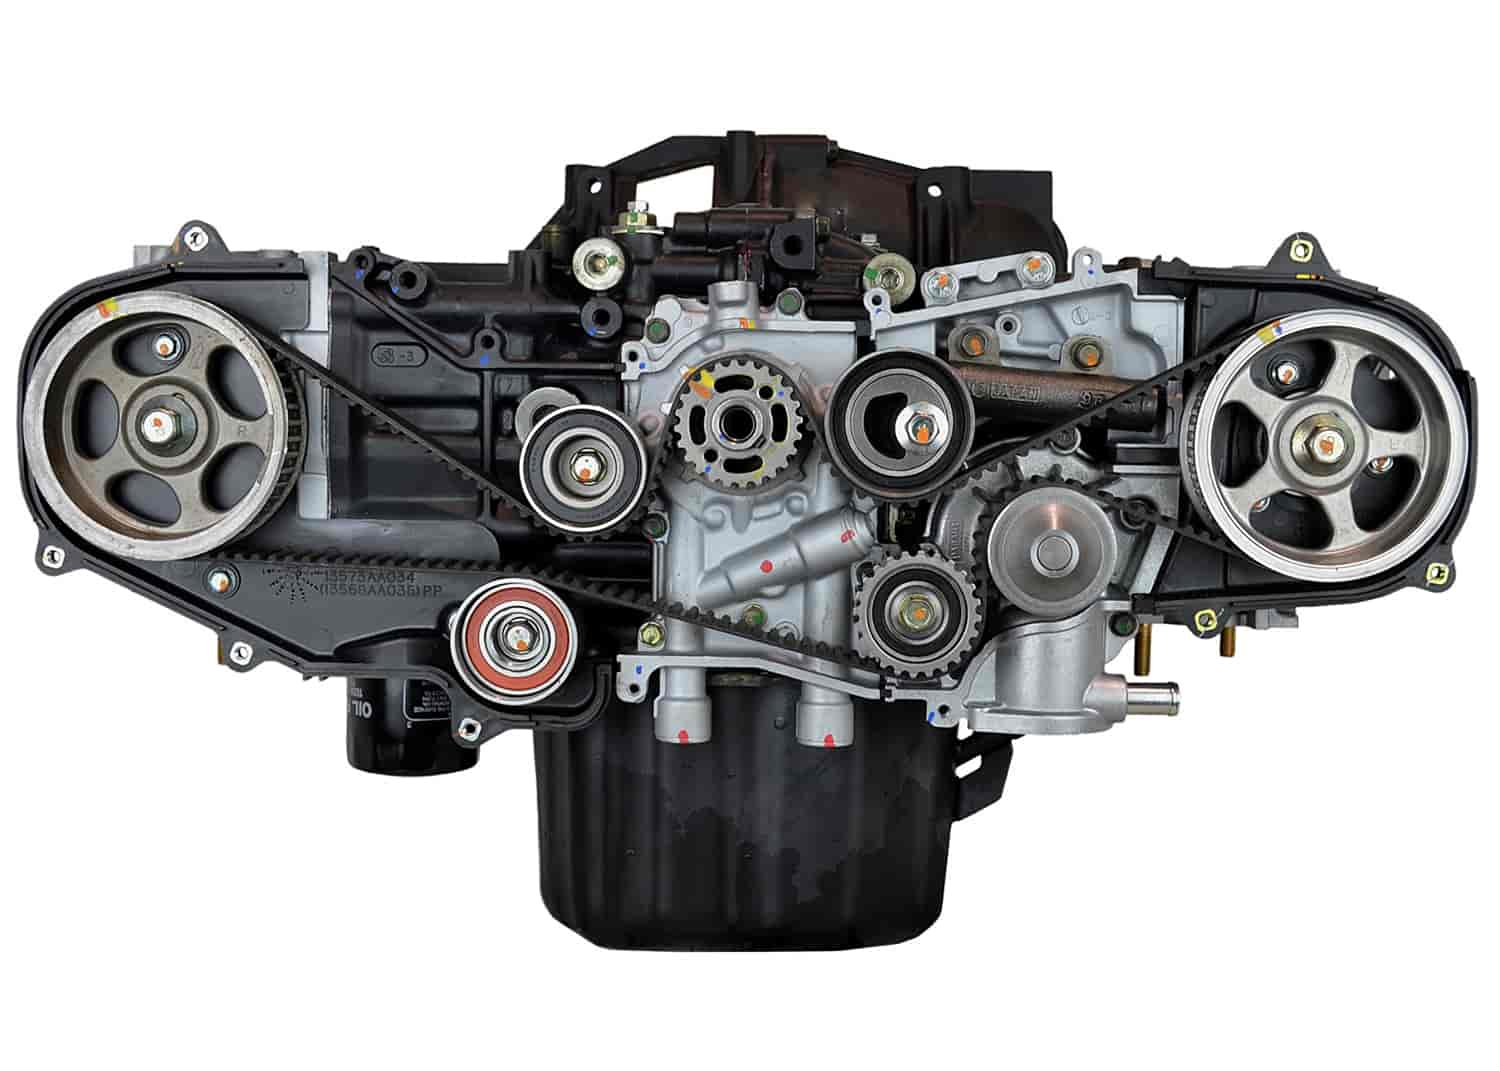 Remanufactured Crate Engine for 1995-1996 Subaru Impreza & Legacy with 2.2L H4 EJ22E